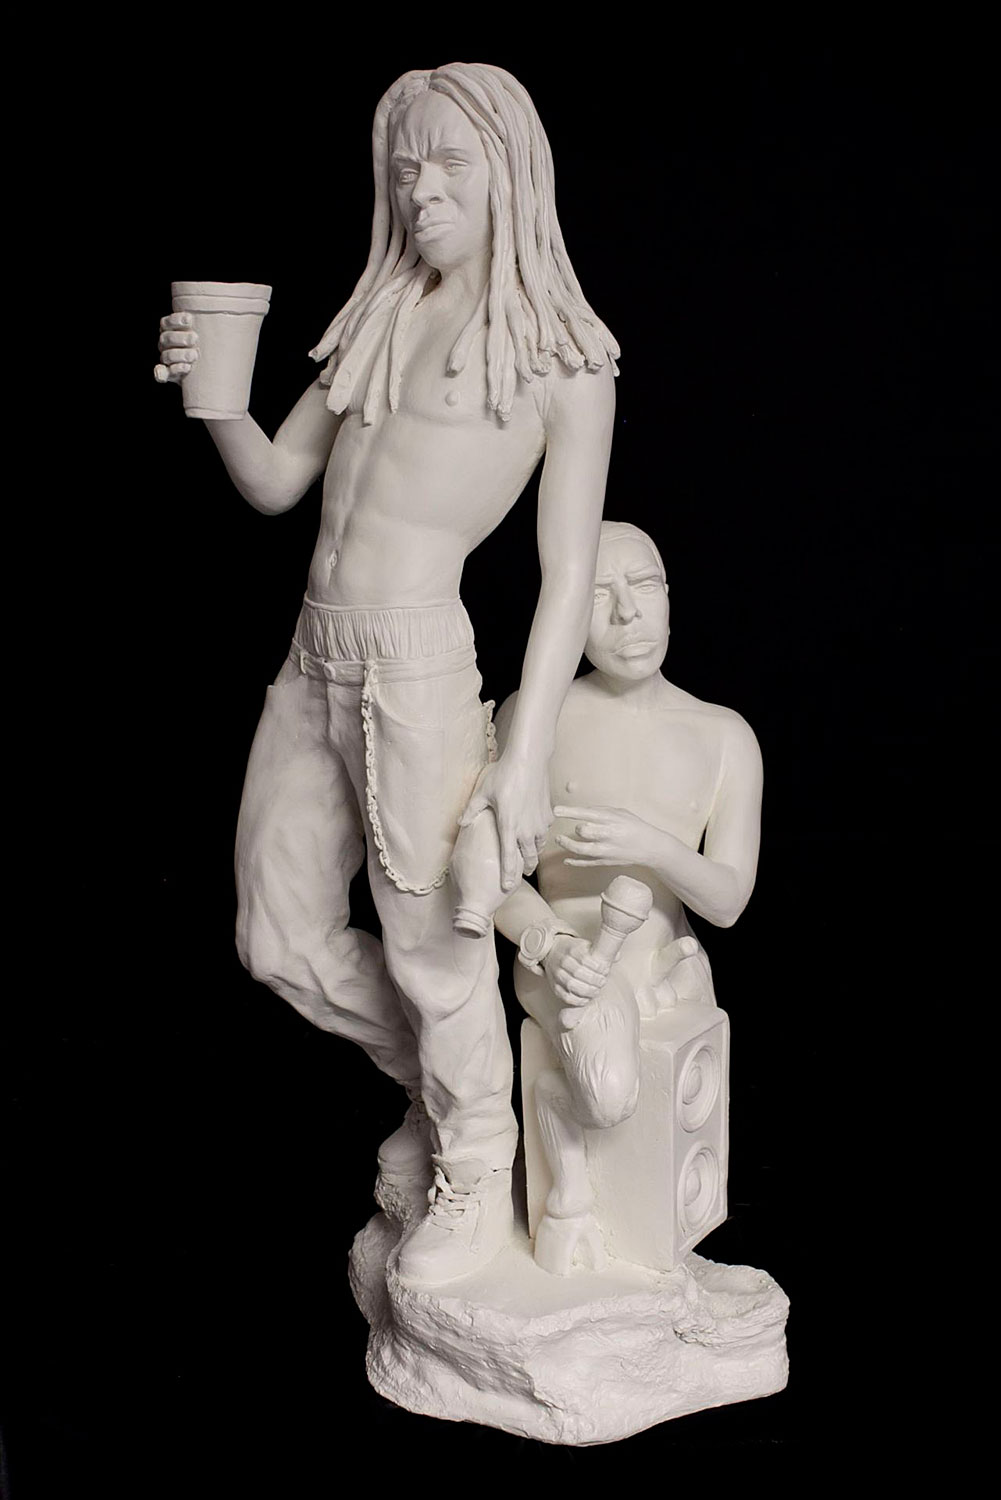 Sarah Hahn, Bacchus/L’il Wayne, 2011. Ceramic, 48x22x20 in.